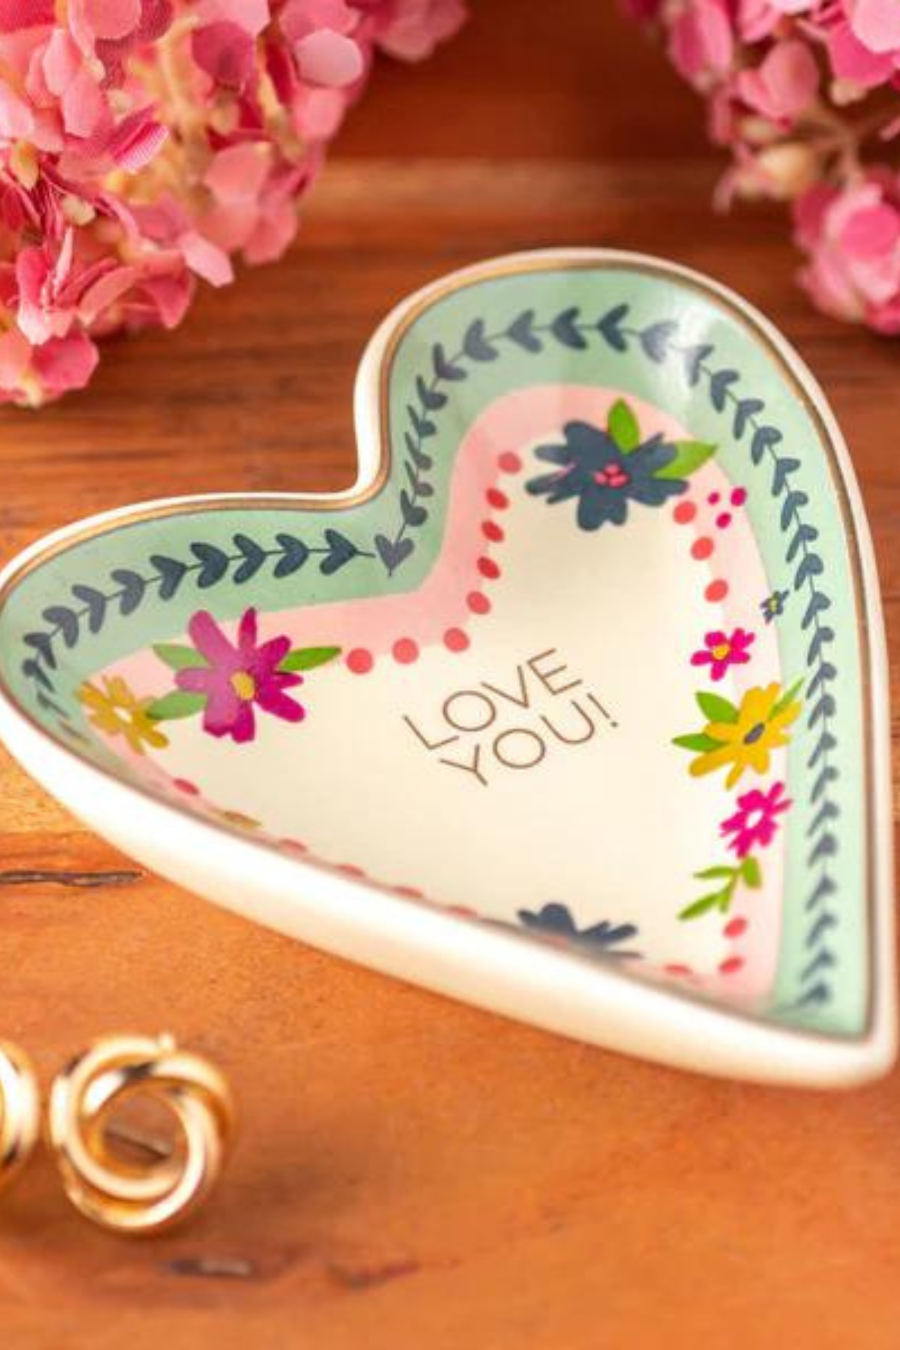 "Love You" Small Heart Shape Trinket Dish